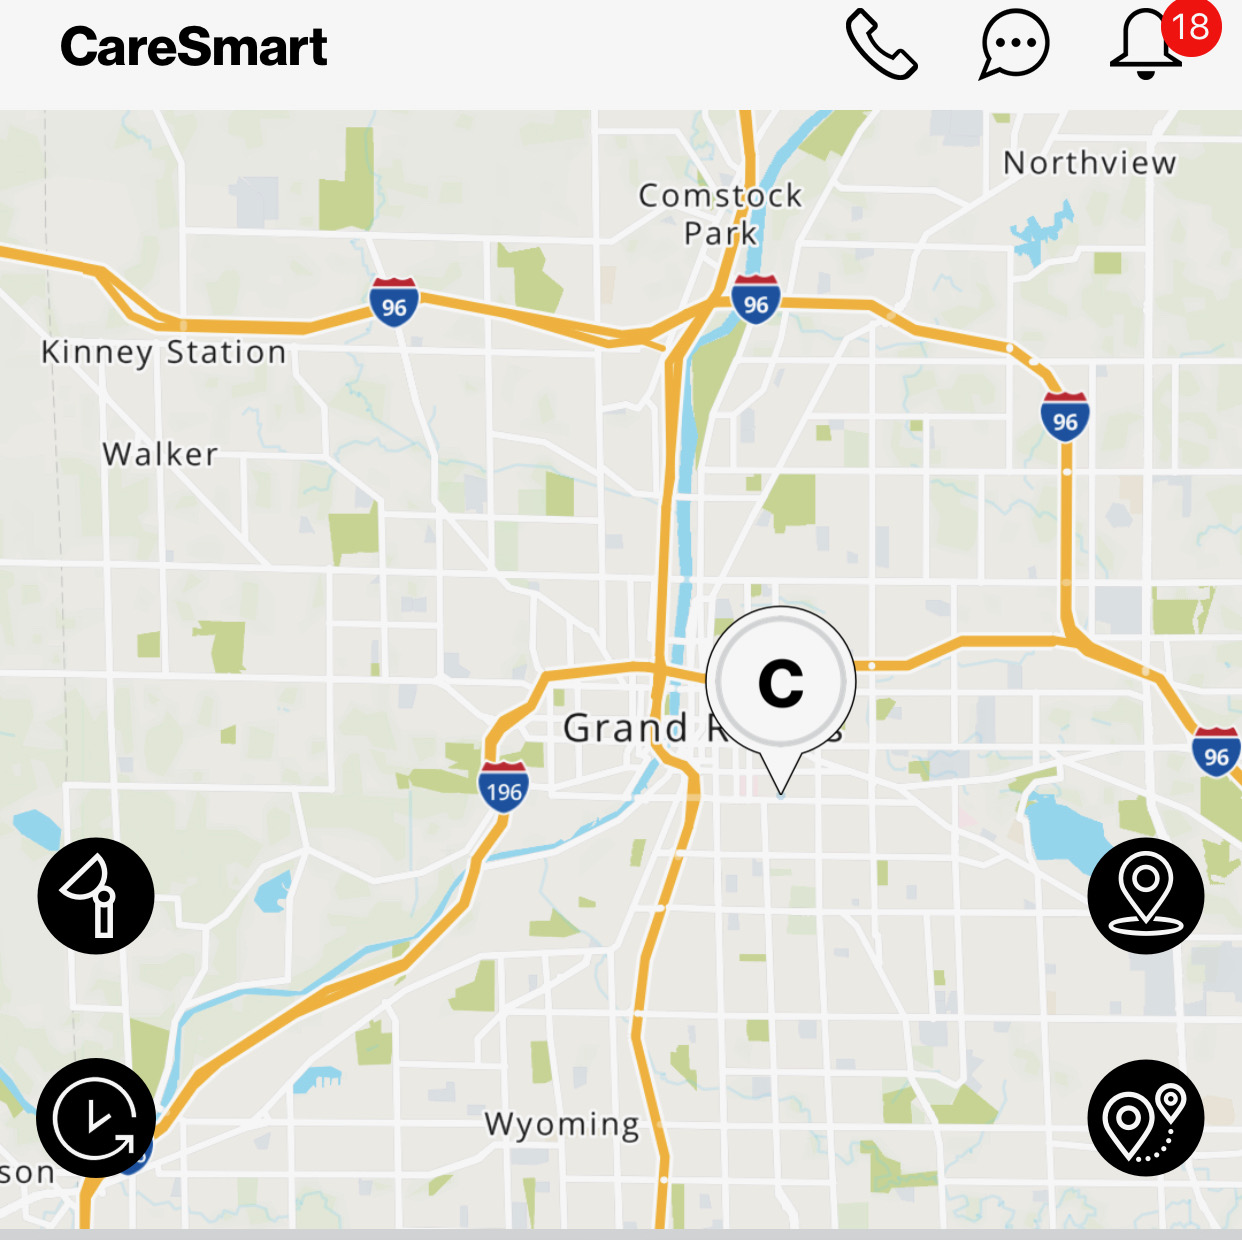 CareSmart Location Tracker